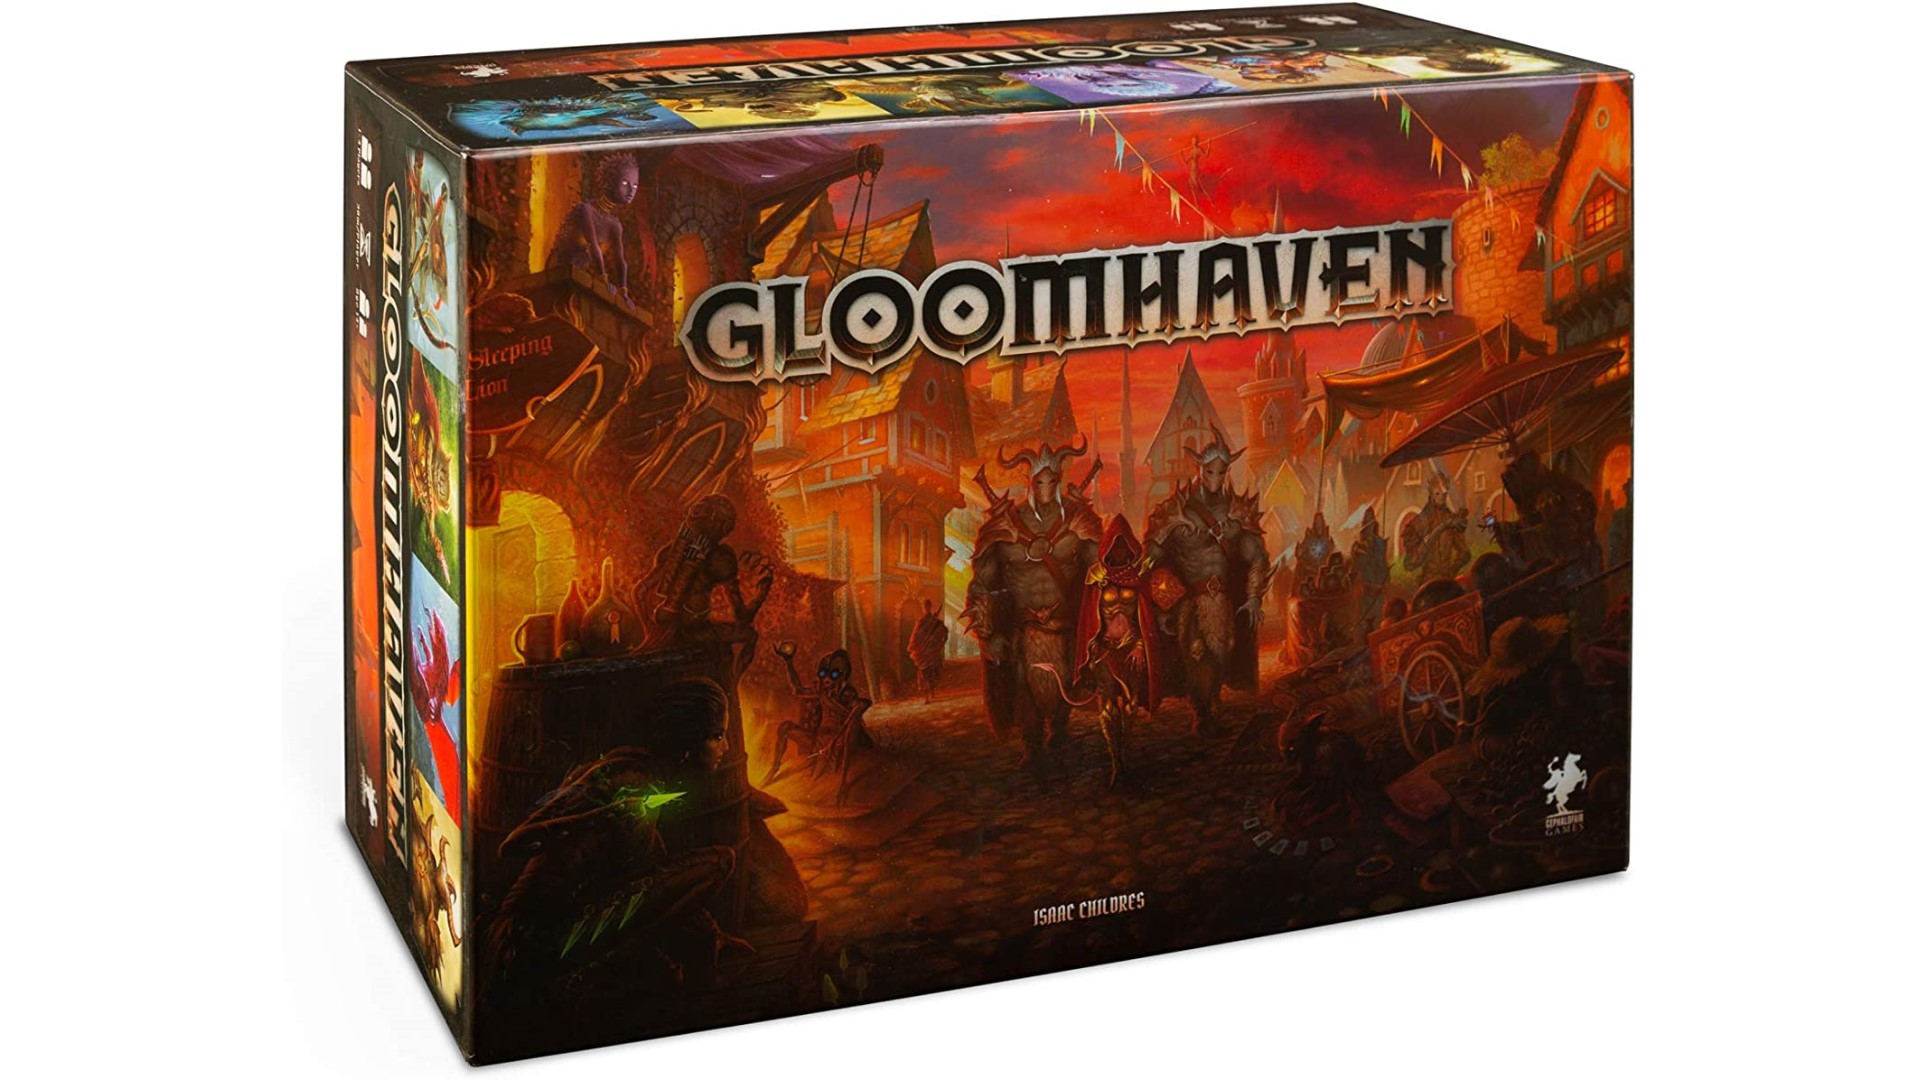 Gloomhaven review - box photo